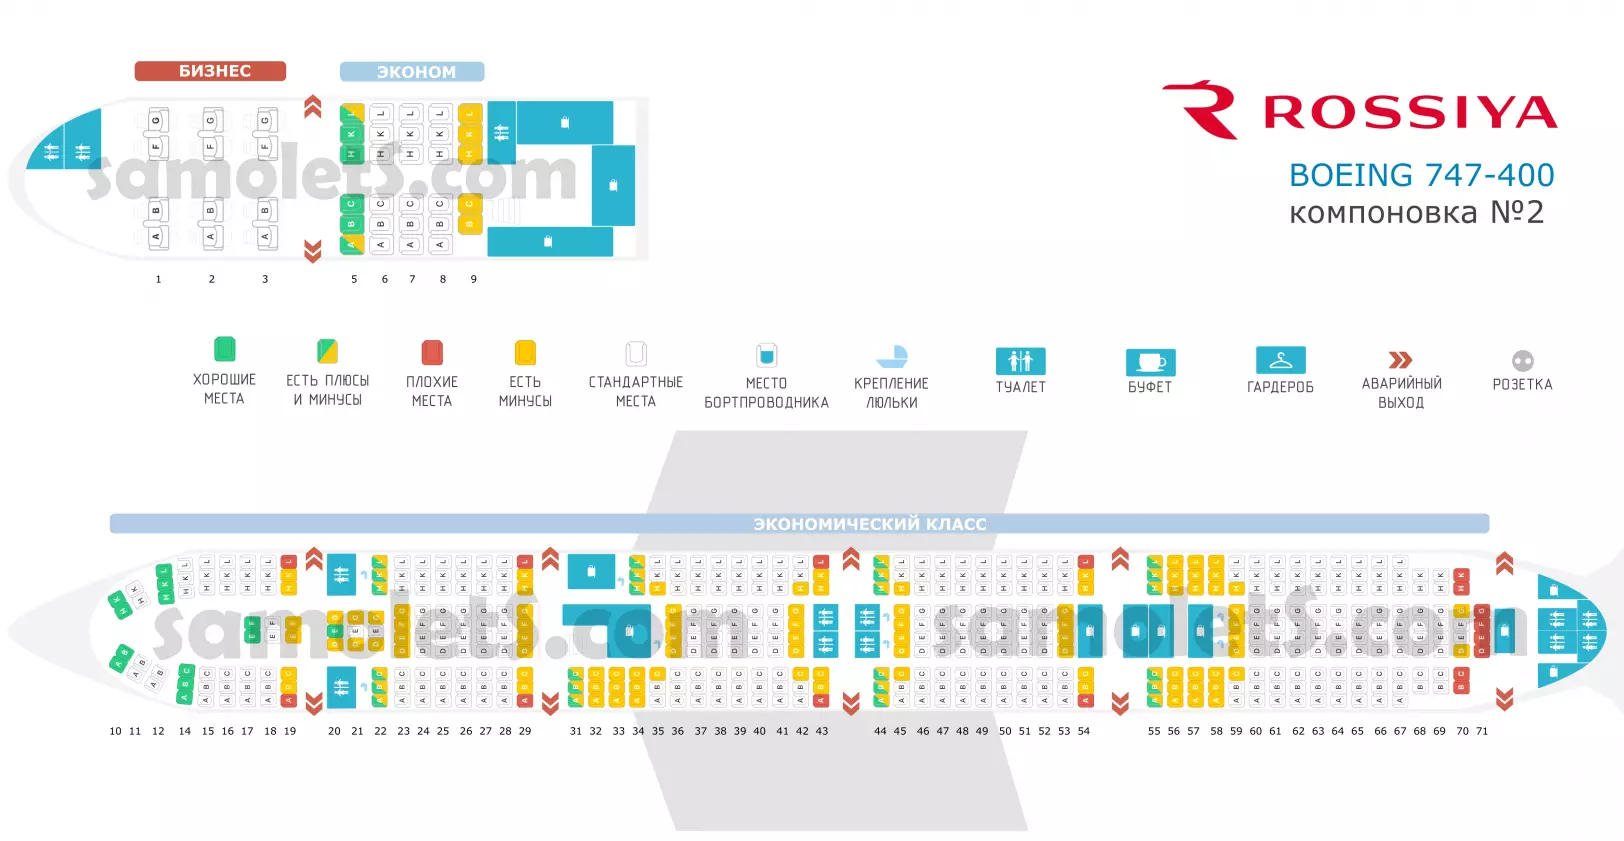 Боинг 747-400 аэрофлот: схема салона, лучшие места